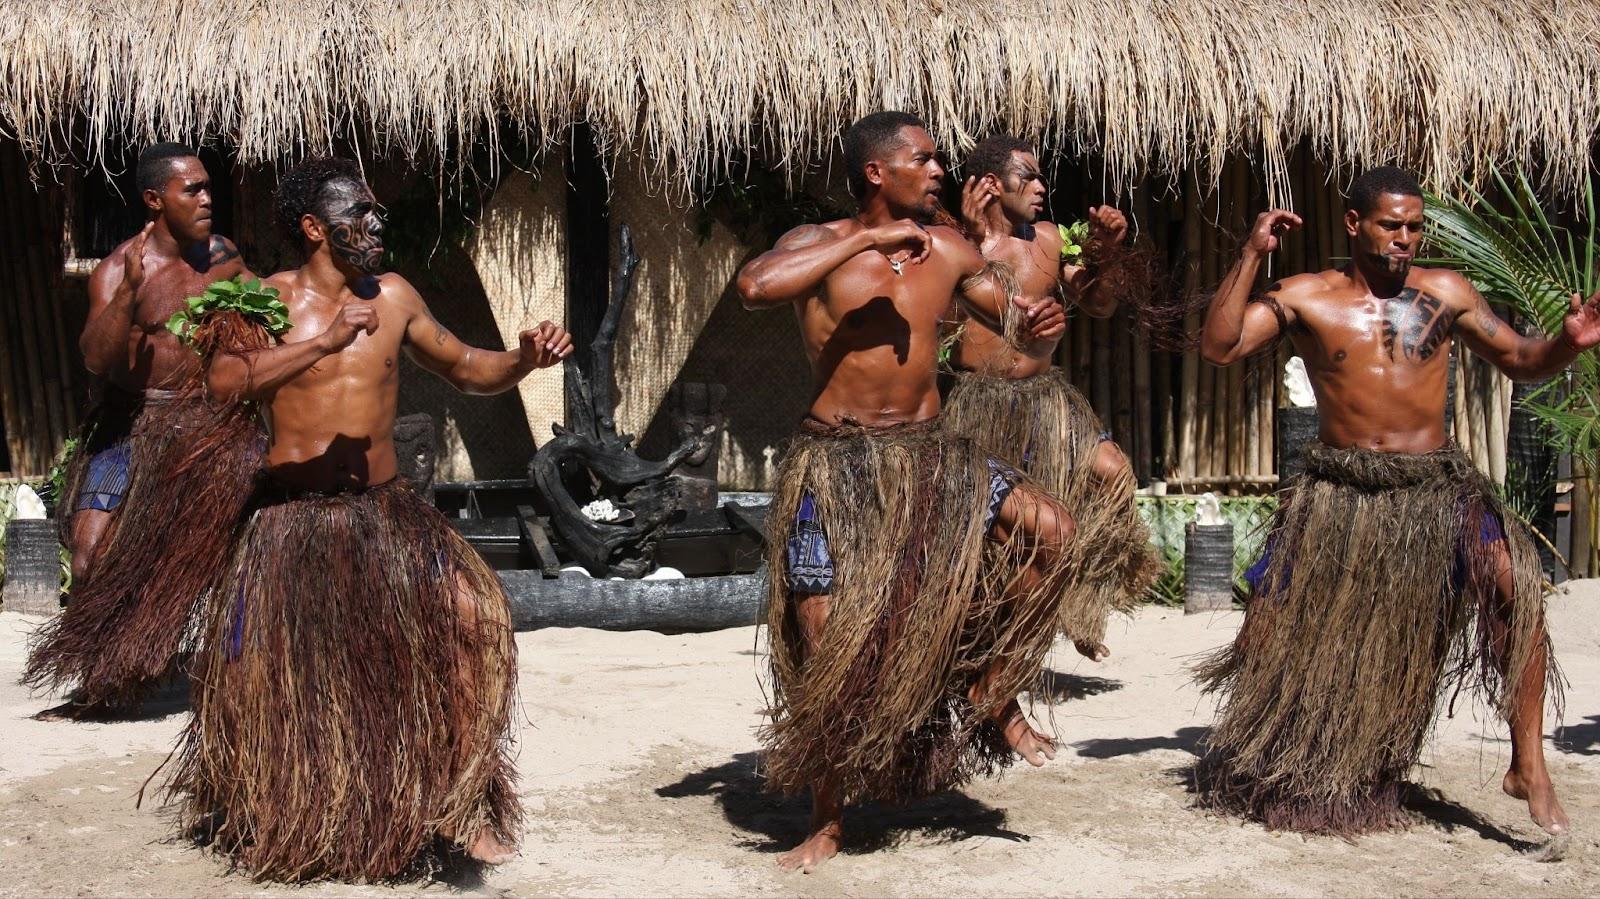 Robinson Crusoe island's dance group performs traditional Meke dance at Dancing Spectacular 